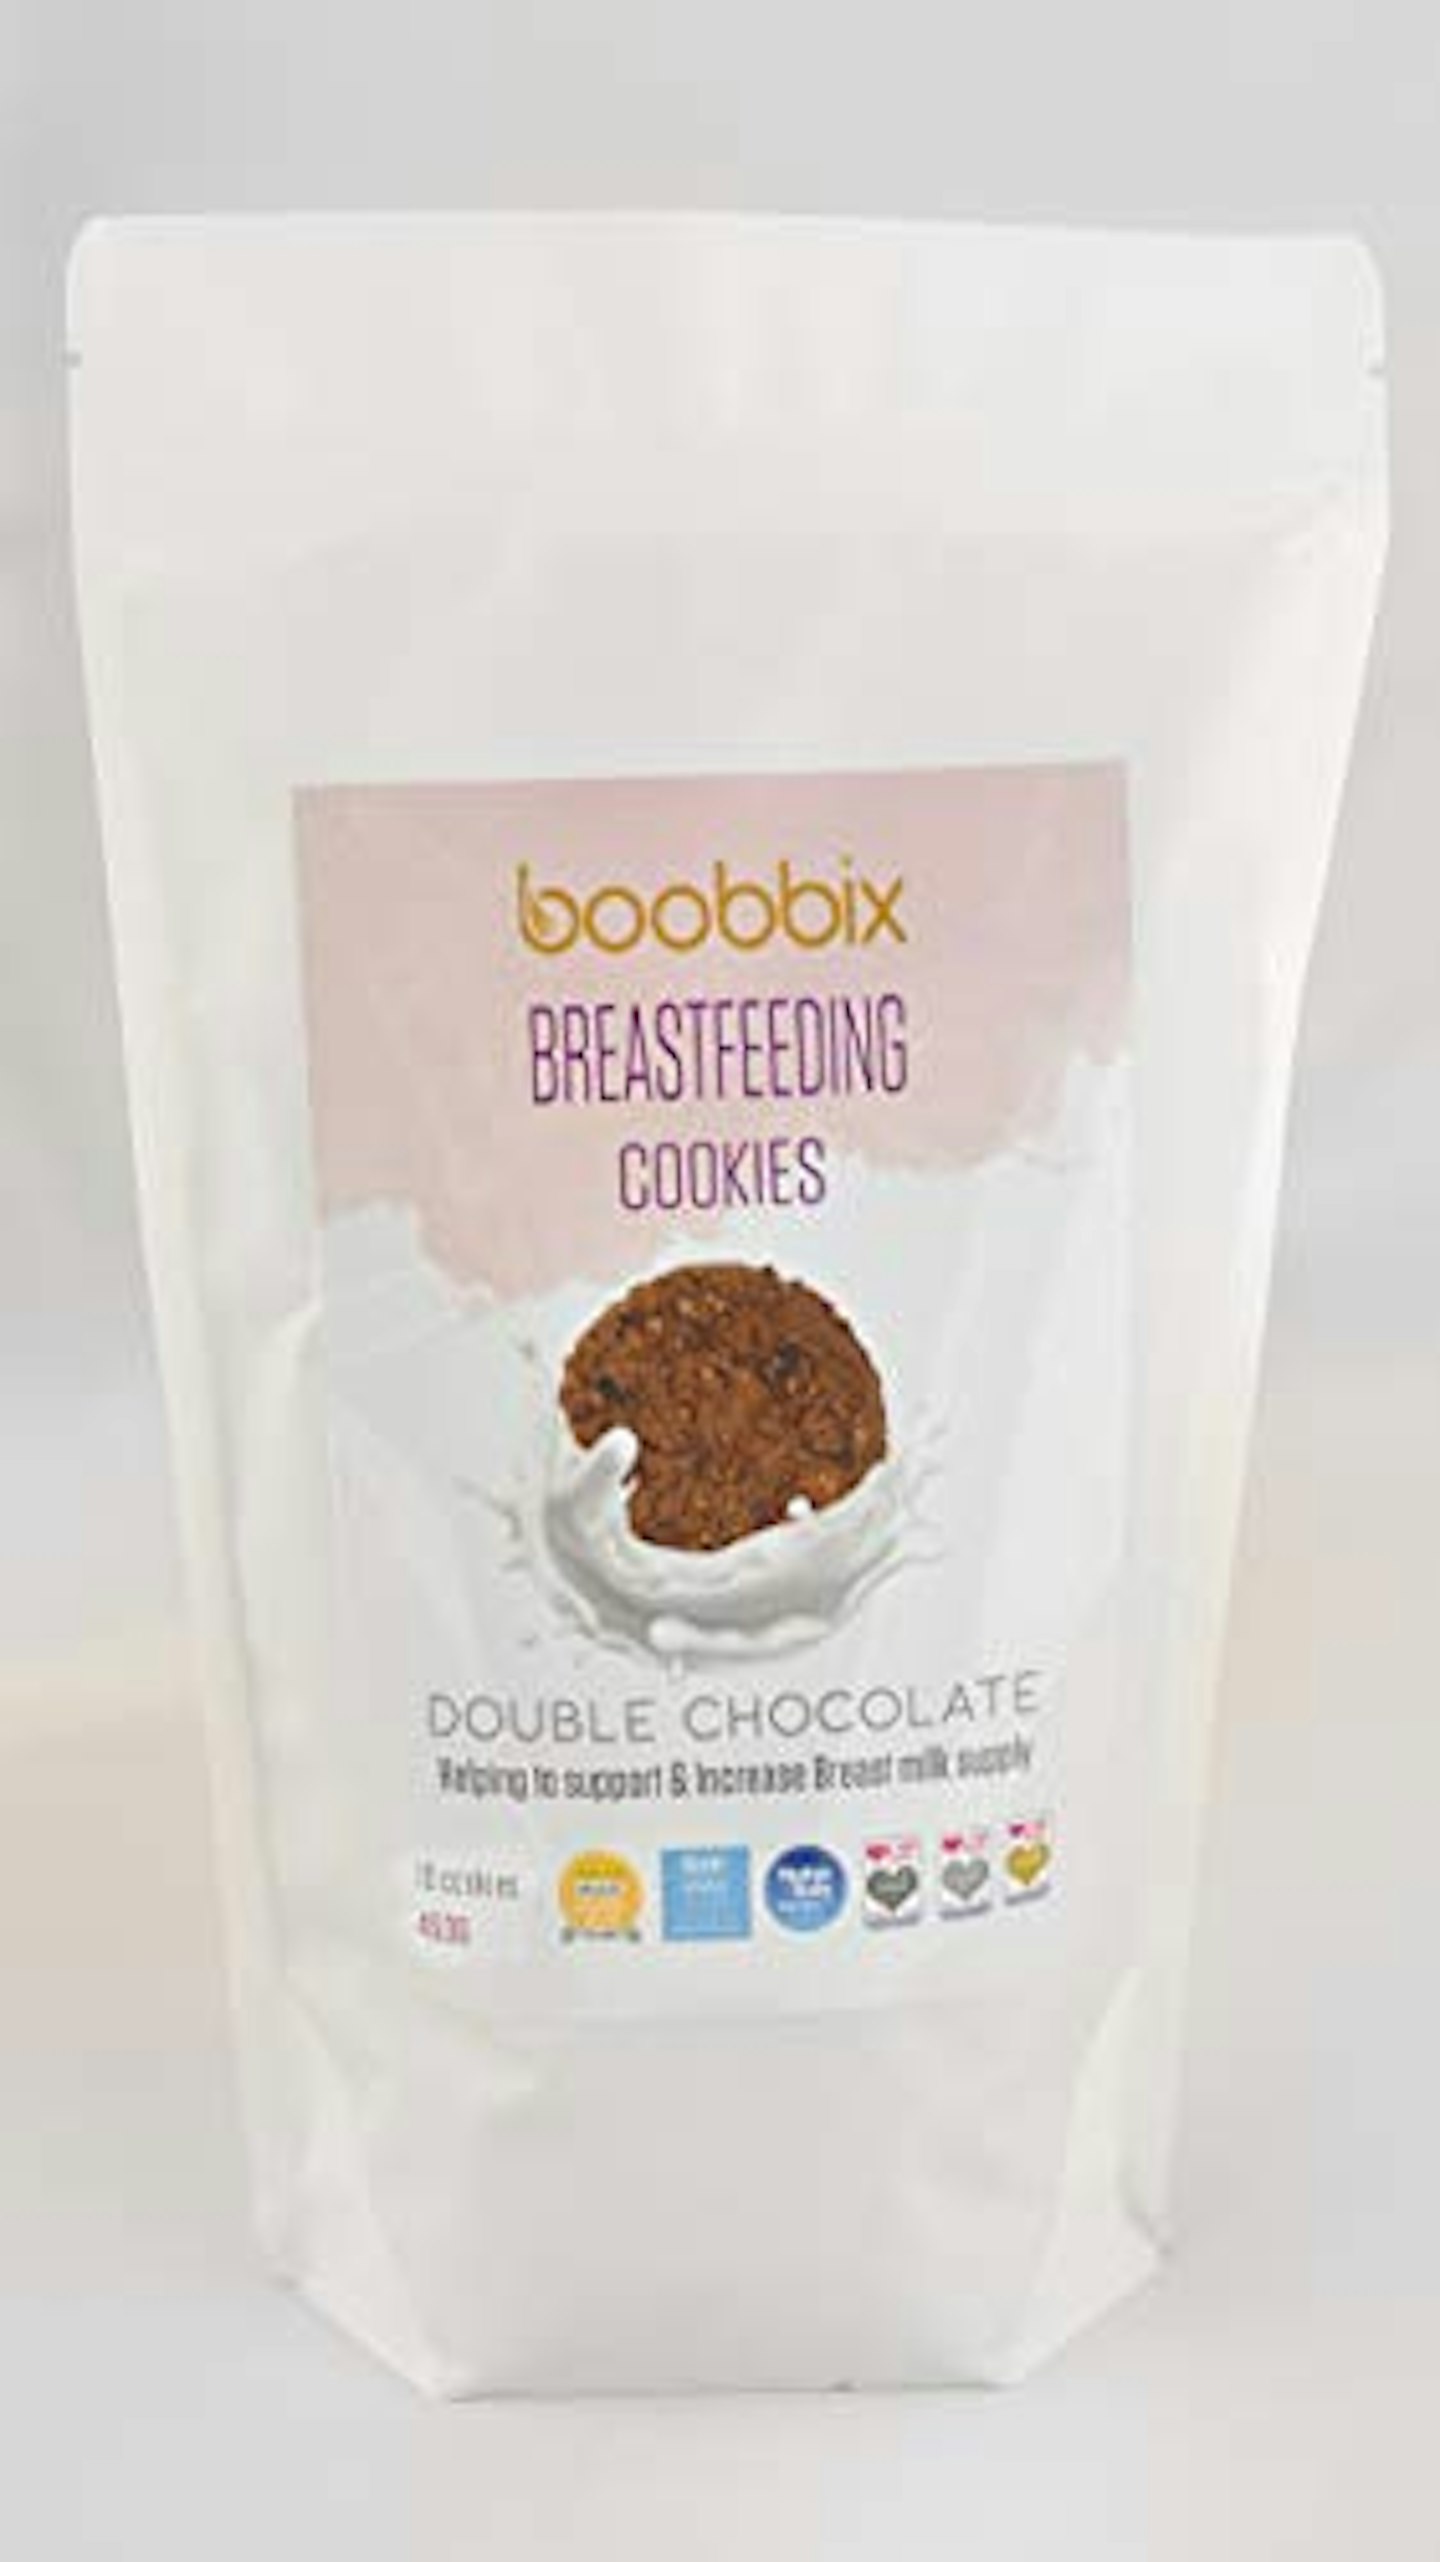 Boobbix Breastfeeding Cookies